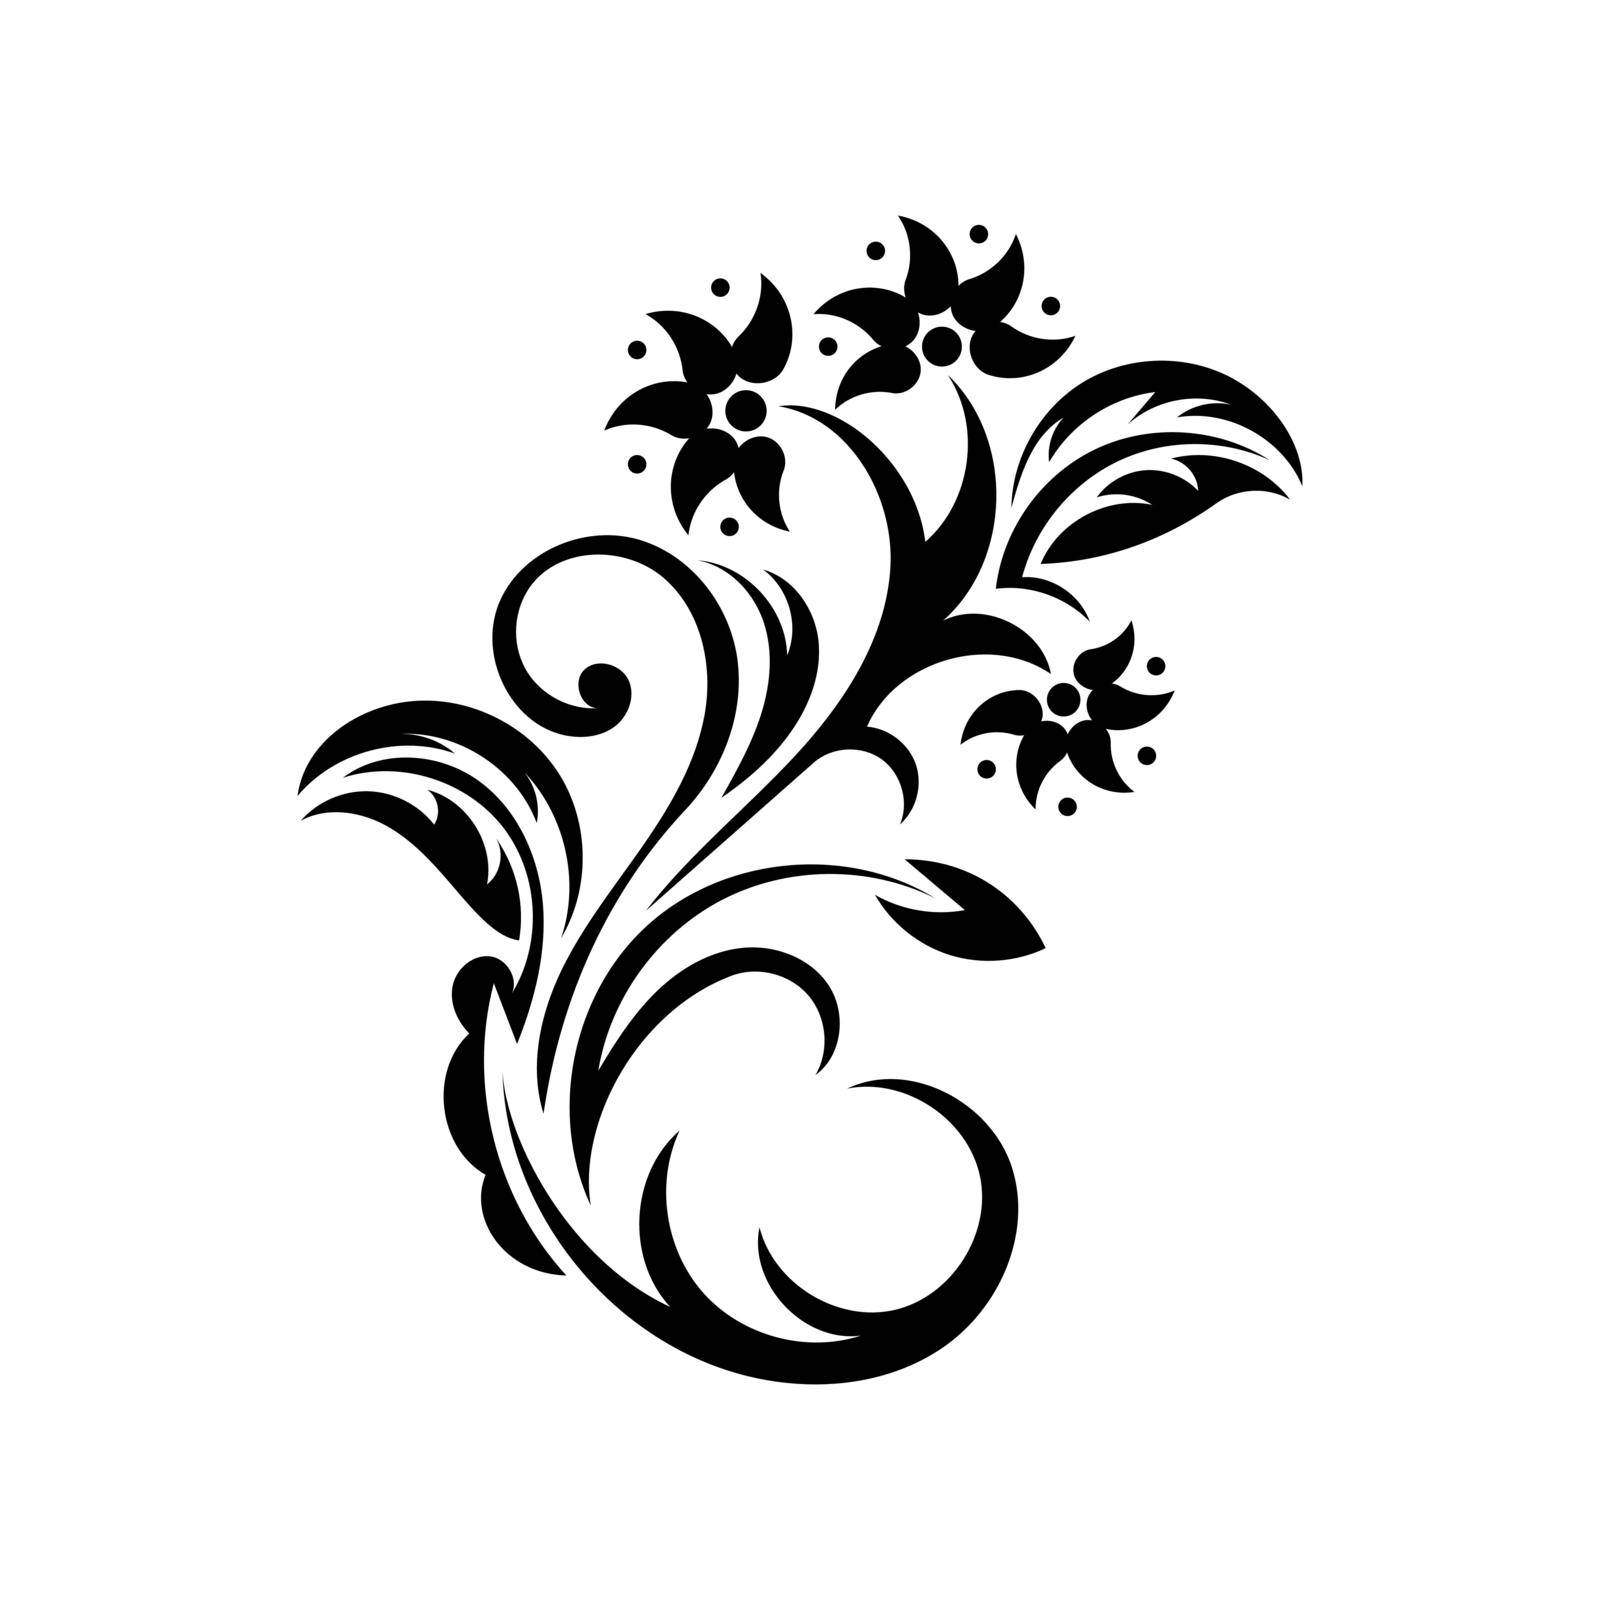 Flower motif, Rose design sketch for pattern,lace edge